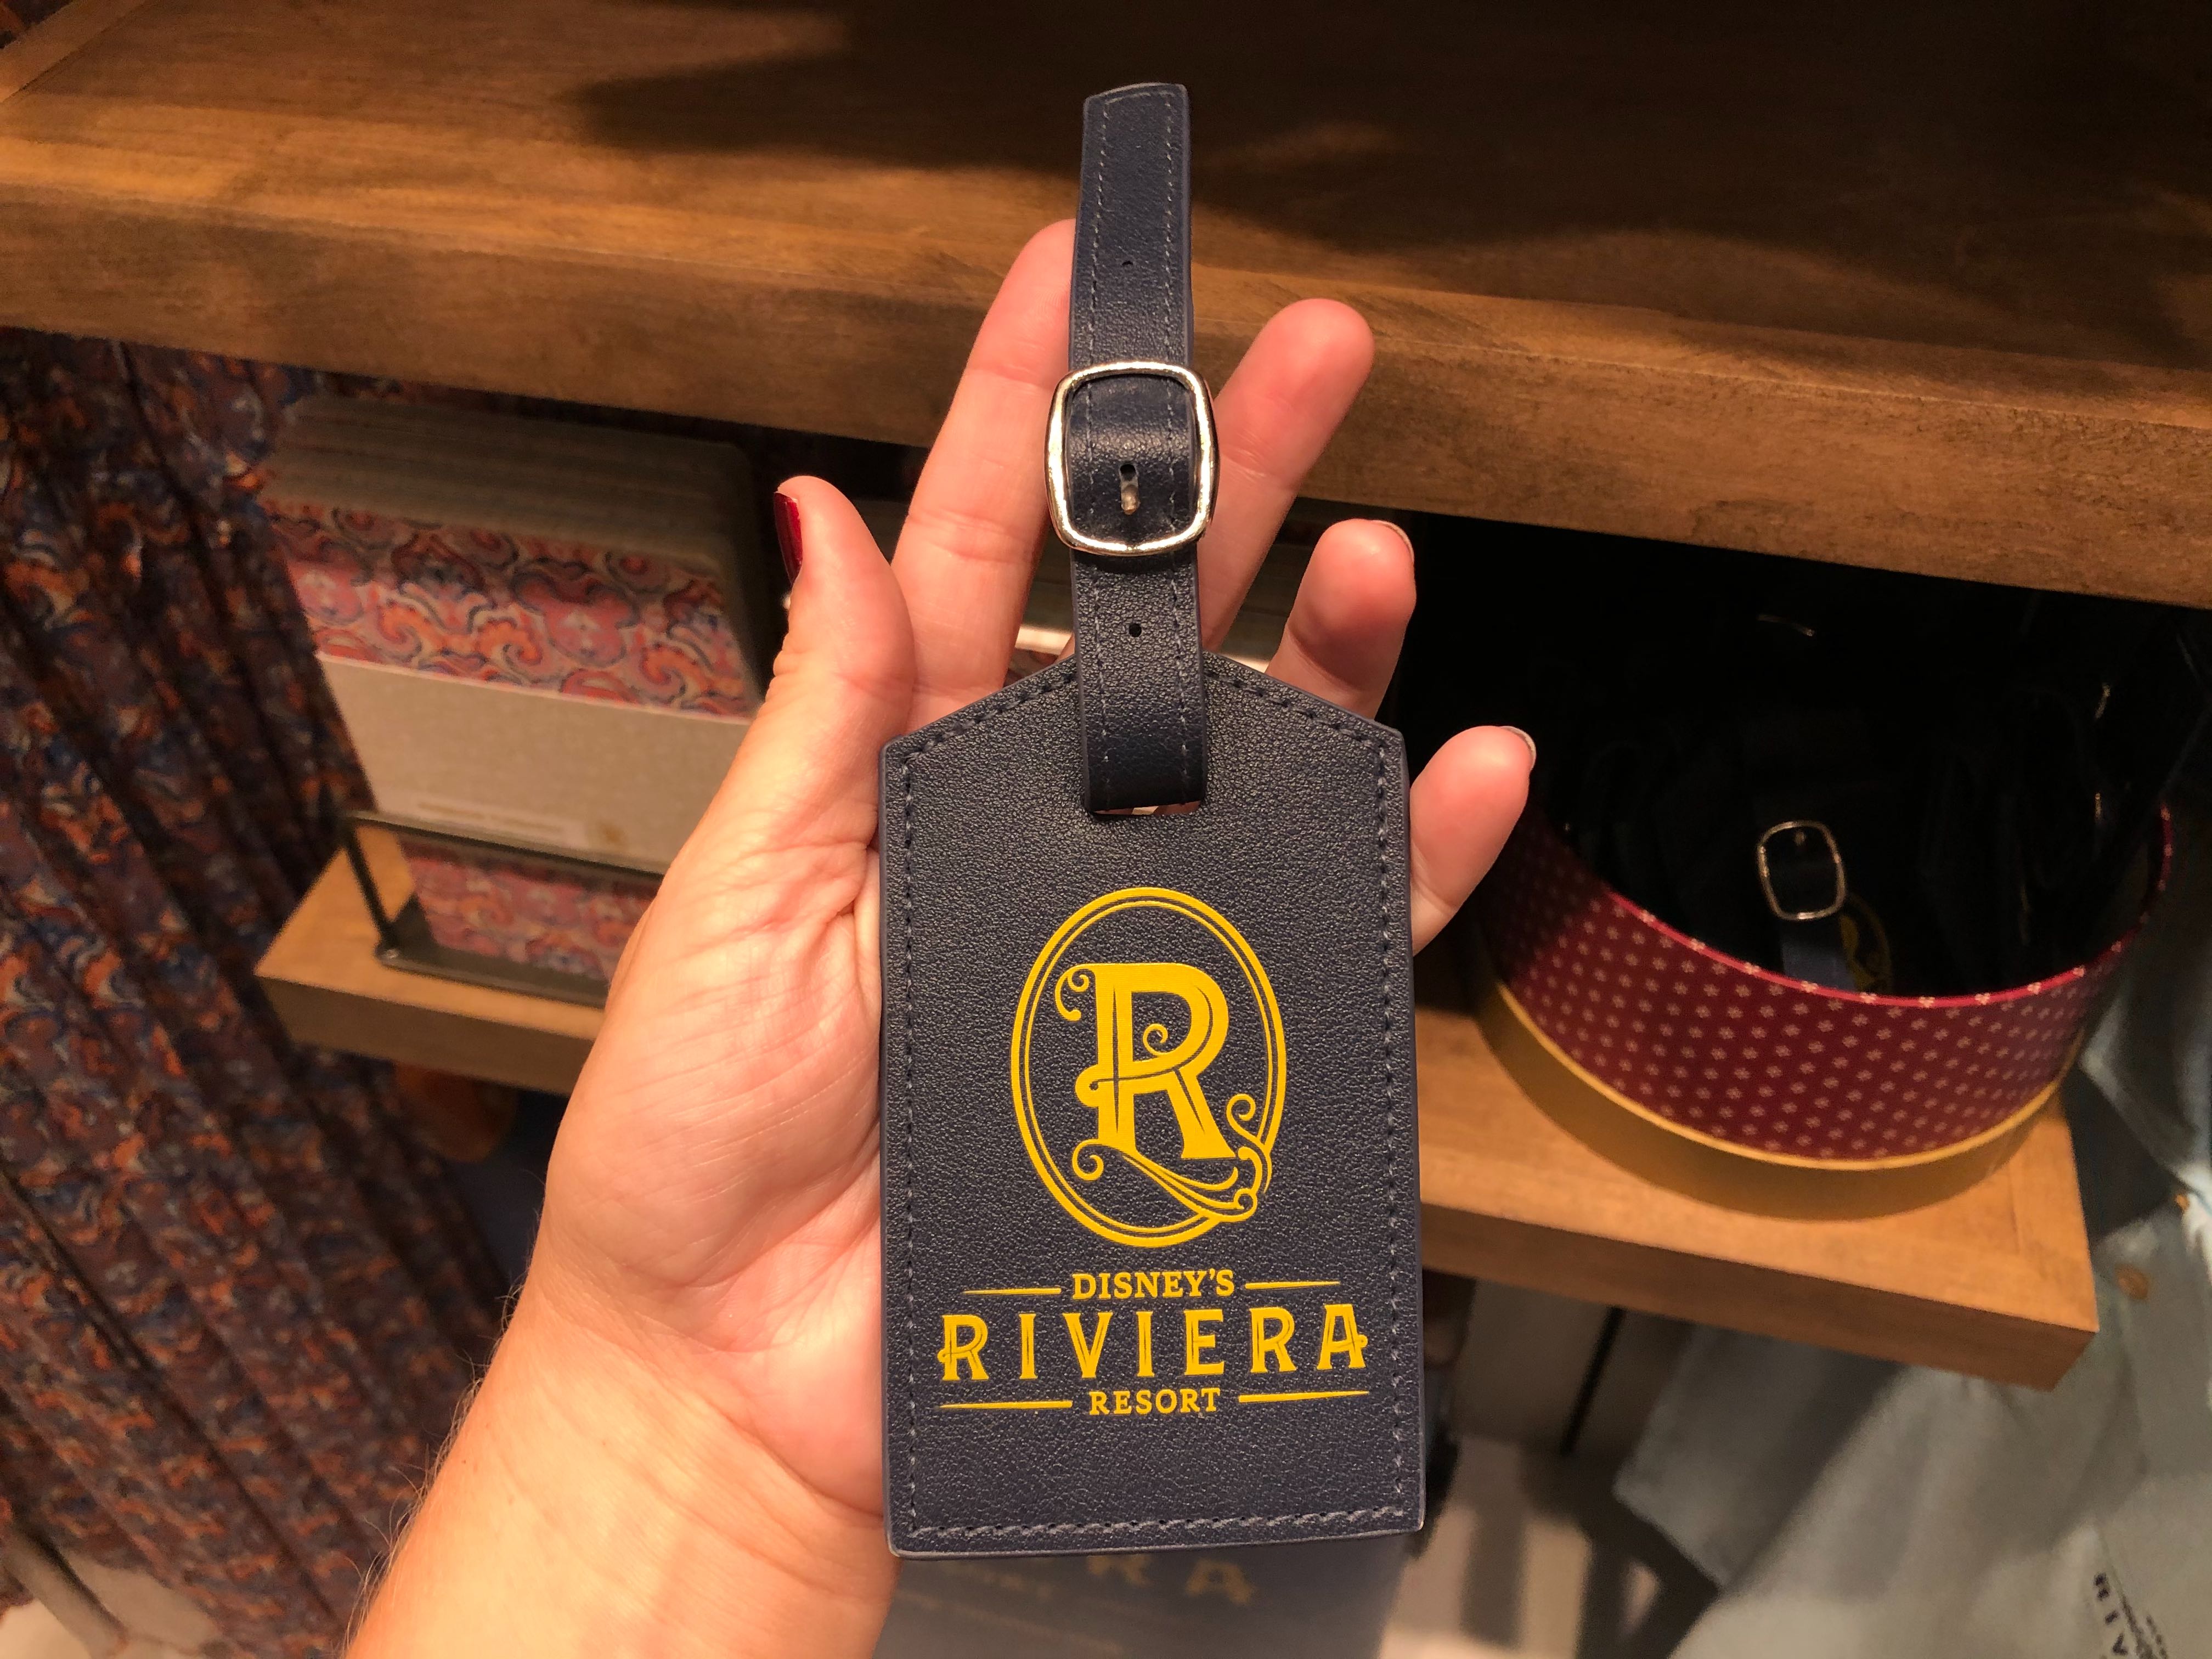 Riviera Resort Luggage Tag - $9.99